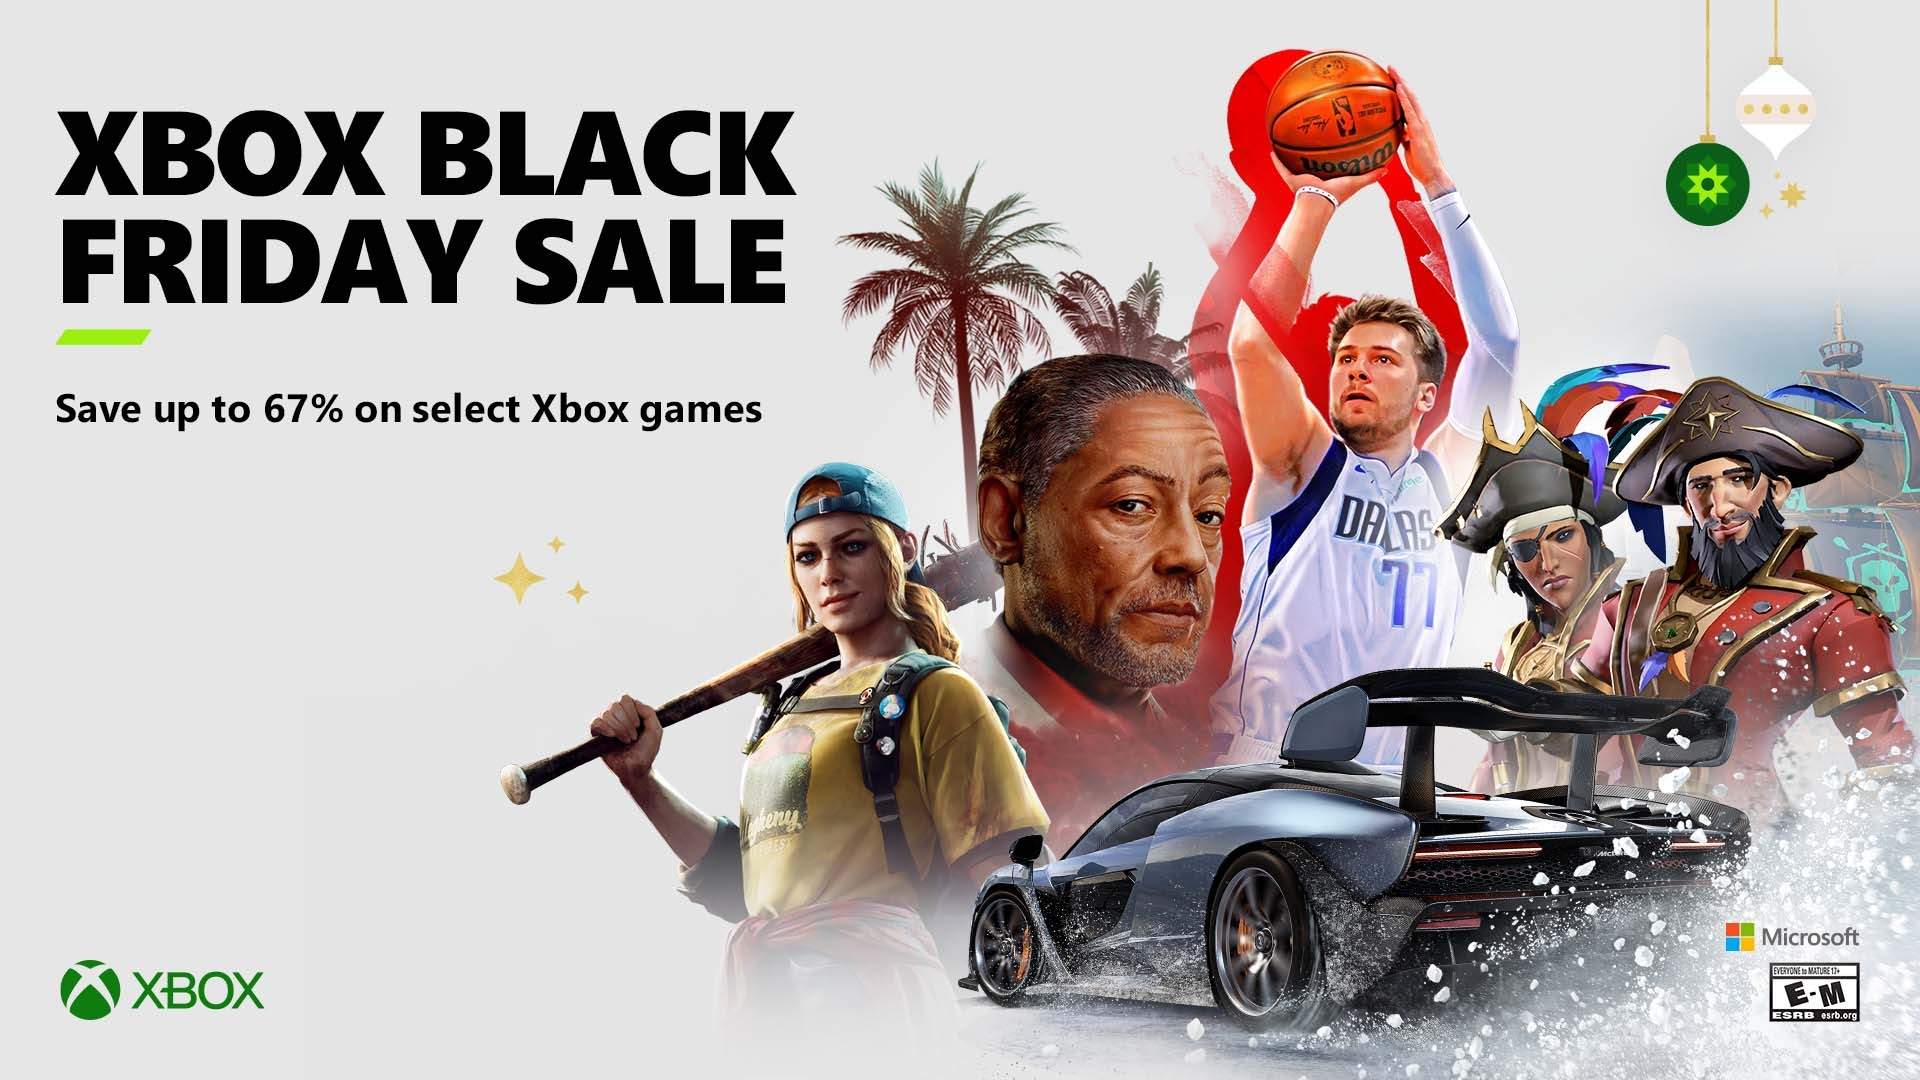 Ingenieurs instructeur Twisted De Xbox Black Friday sale is van start gegaan - PlaySense